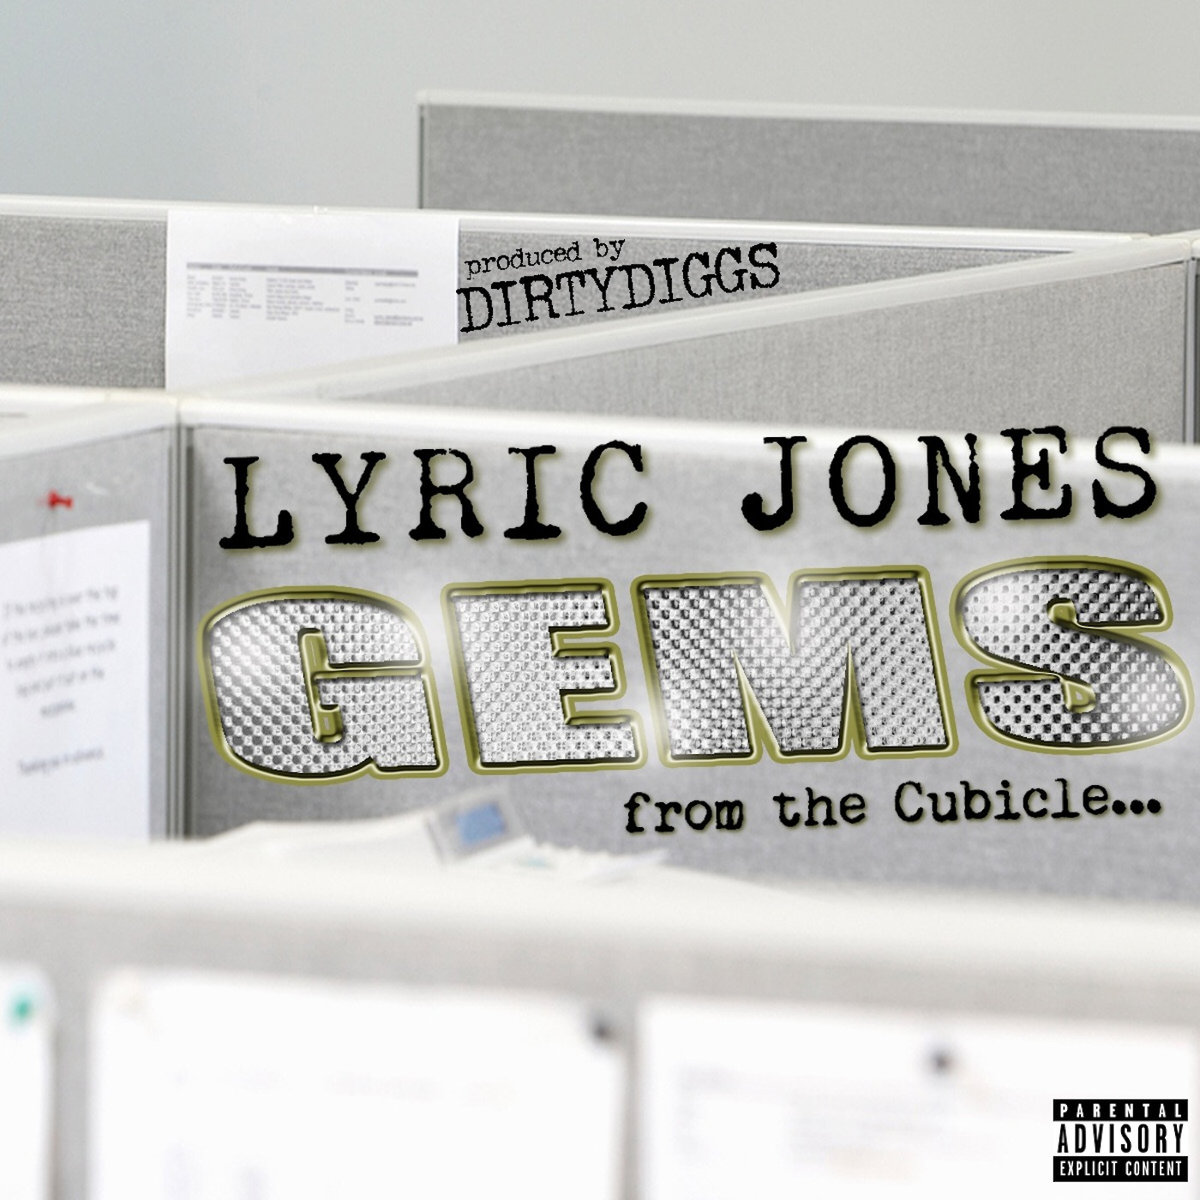 Lyric_jones_gems_from_the_cubicle